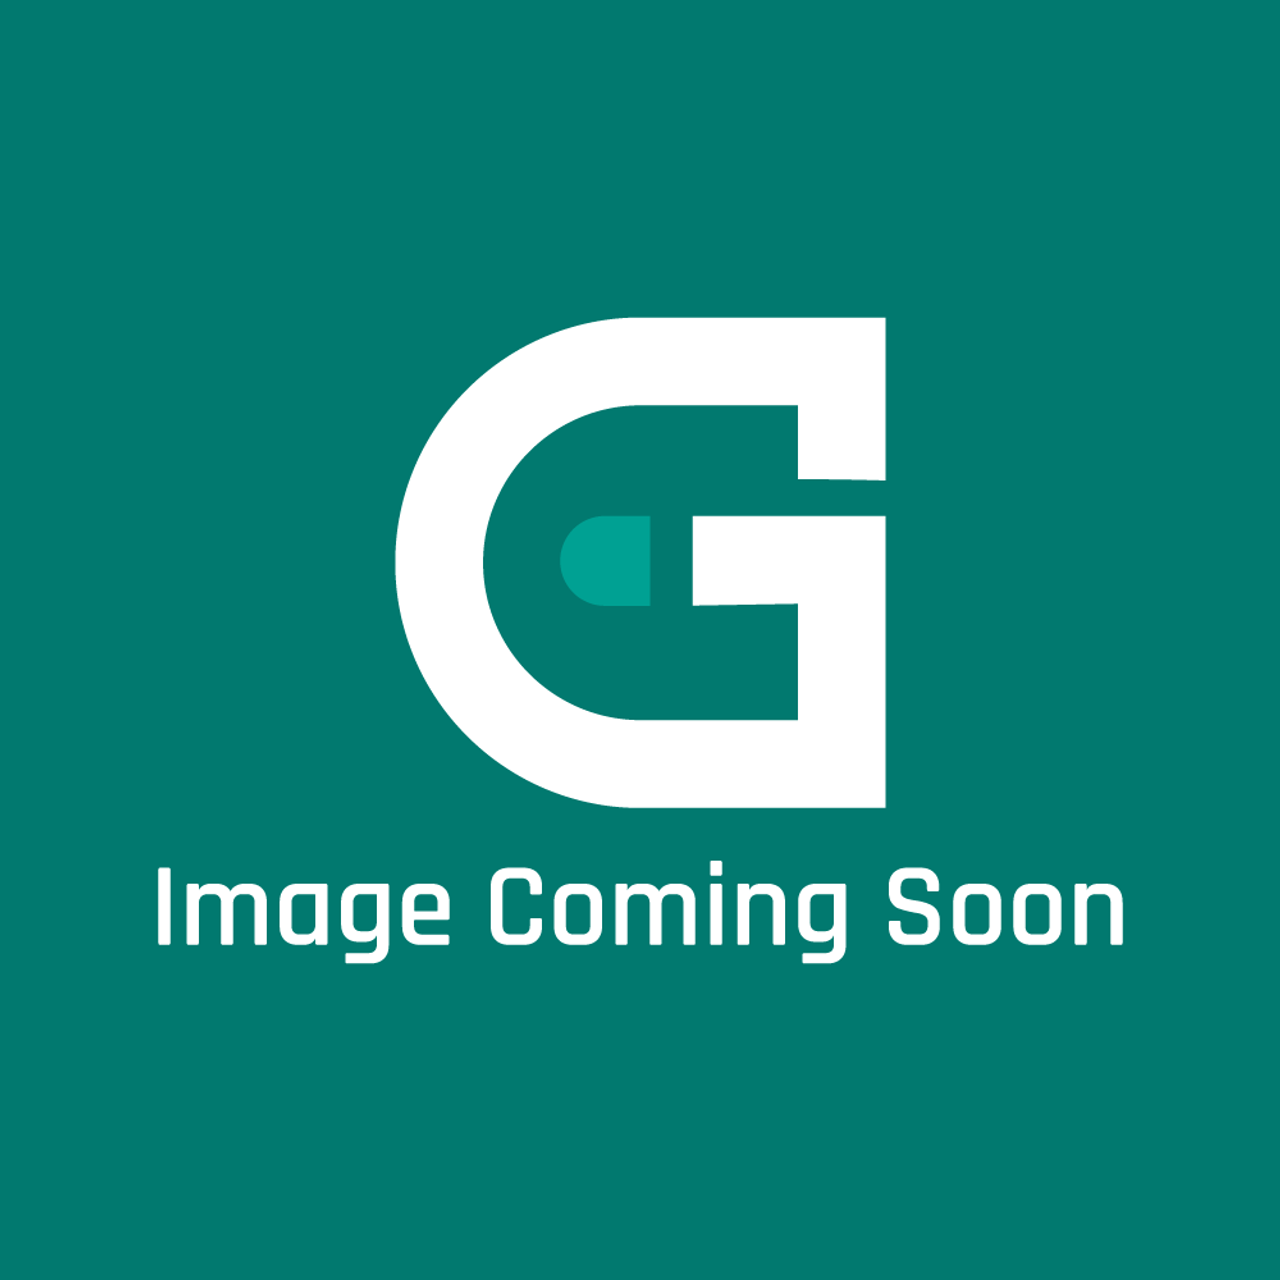 Frigidaire - Electrolux 241513001 Channel-Shelf Mtg - Image Coming Soon!